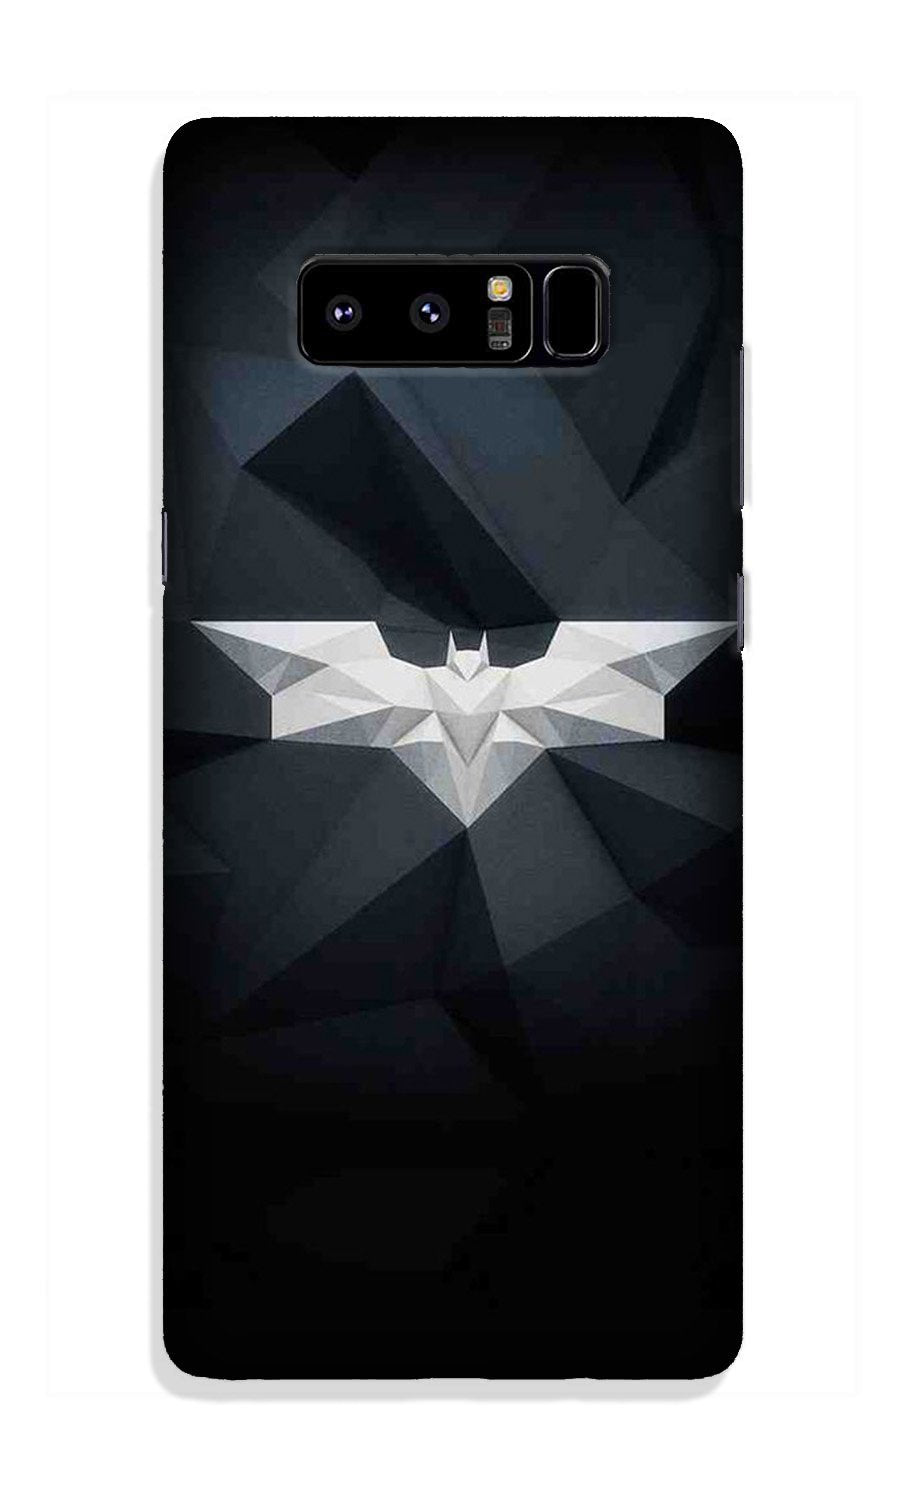 Batman Case for Galaxy Note 8